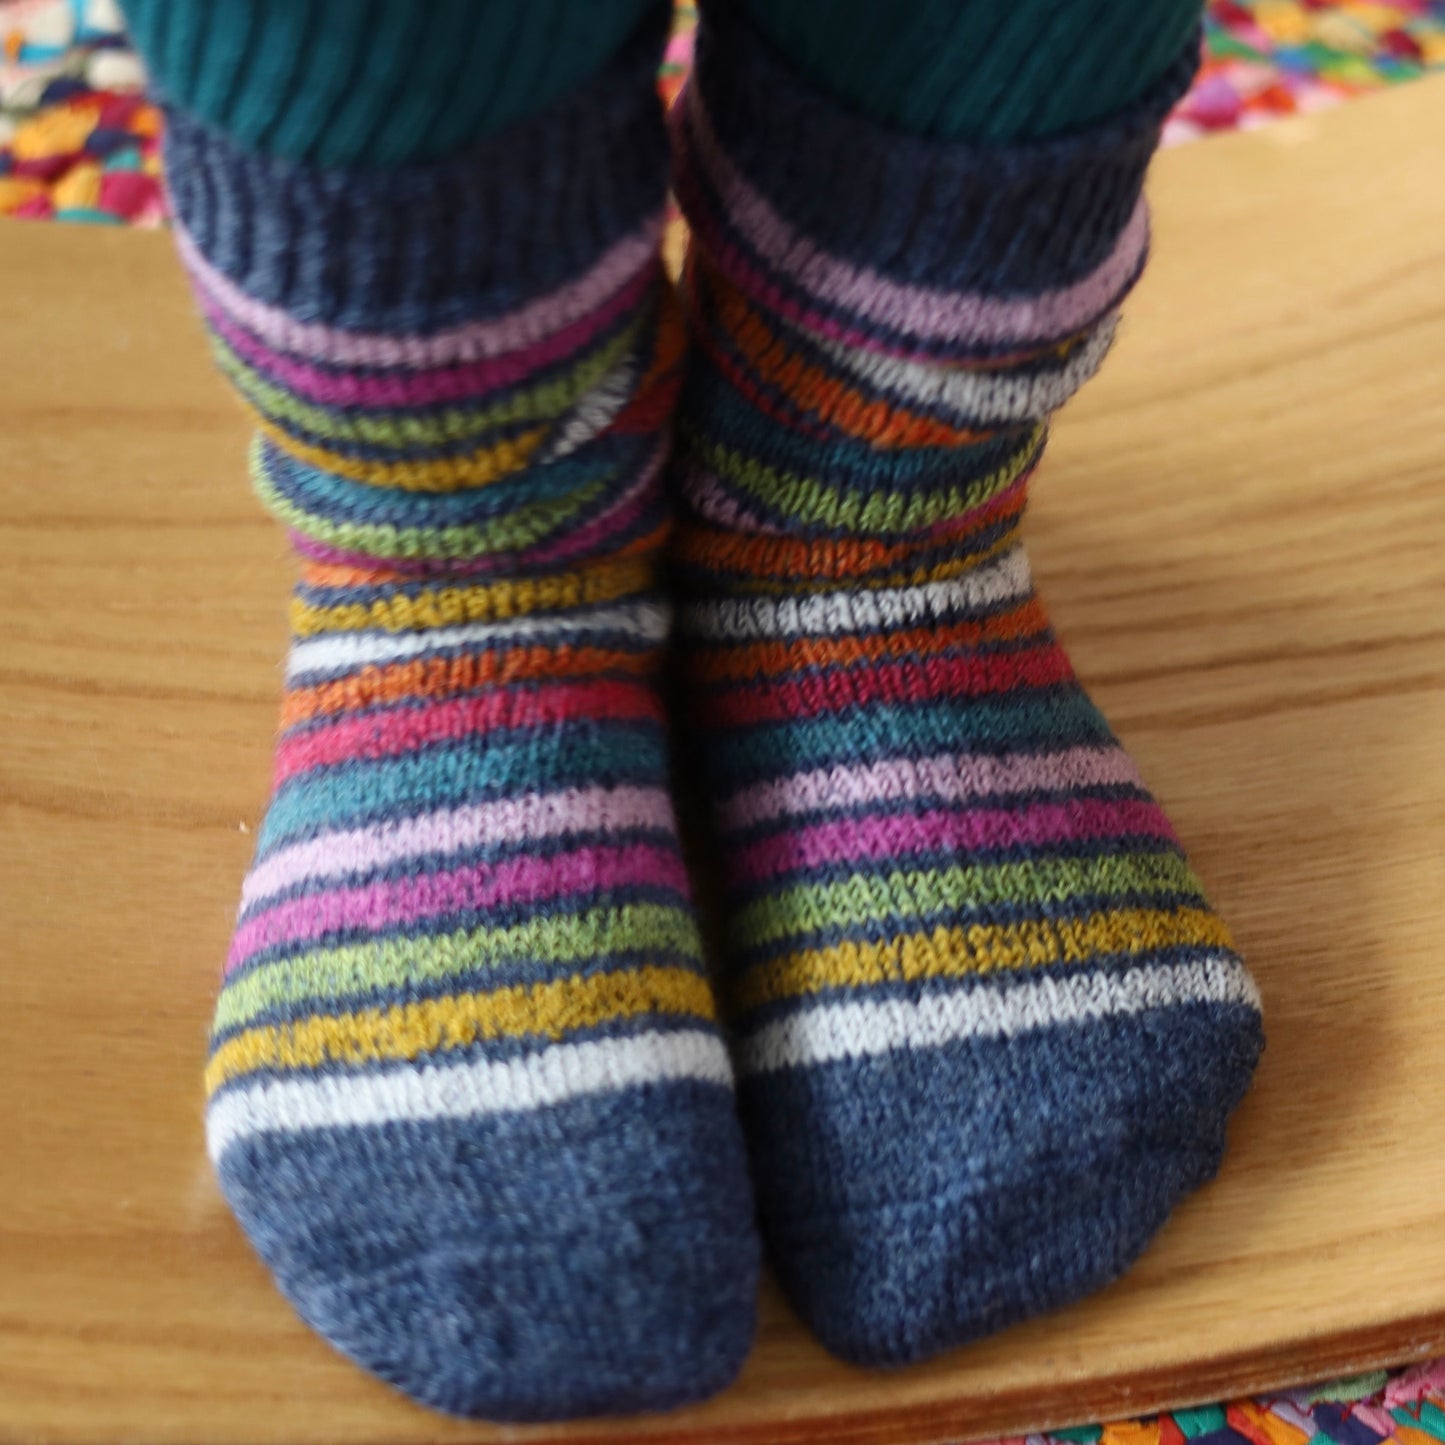 Hirsch Natur - 100% Organic Virgin Wool Thick Socks, Sizes 6-11.5 for Men  and Women